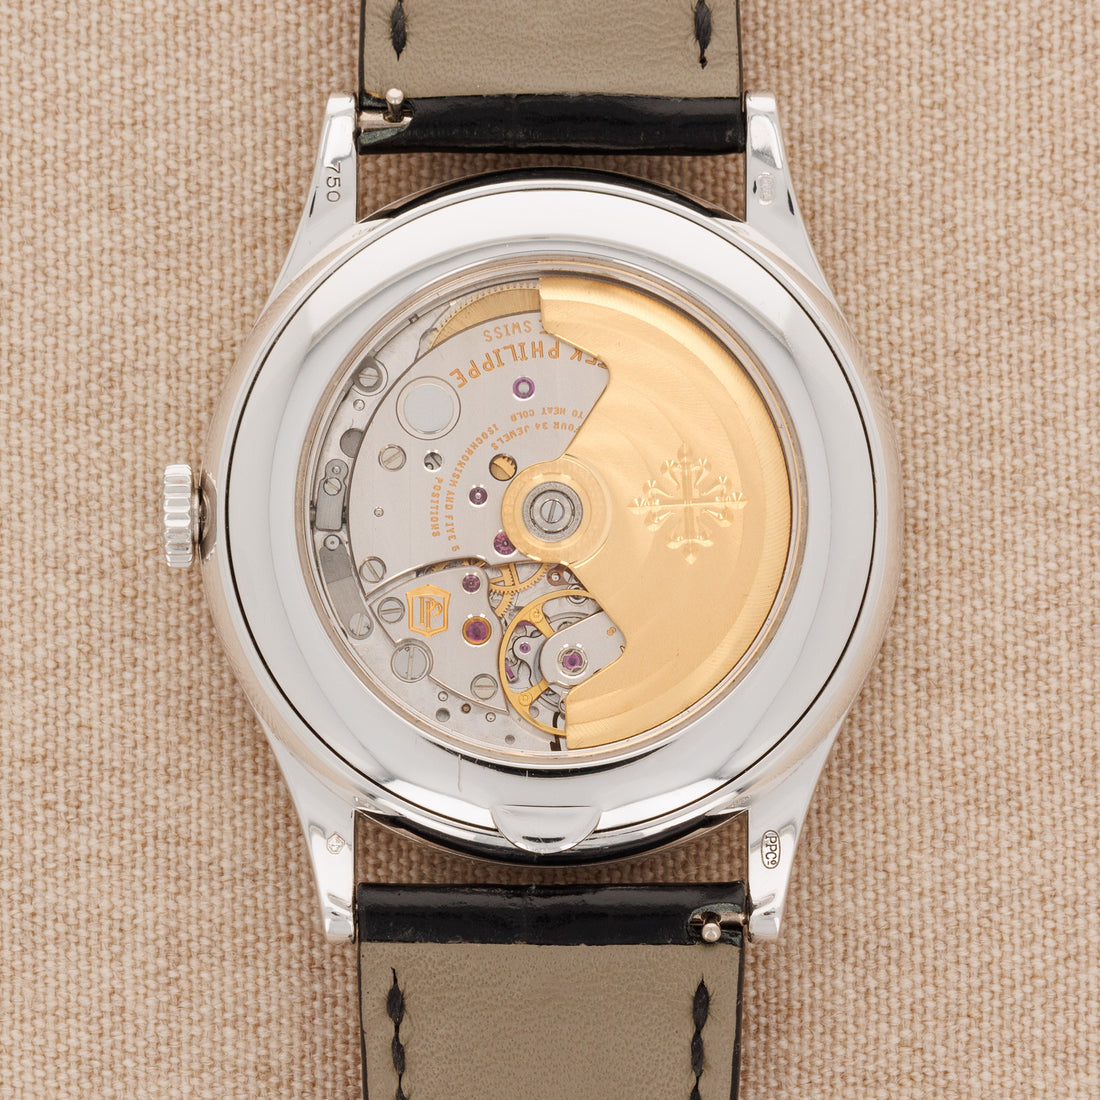 Patek Philippe White Gold Annual Calendar Watch Ref. 5396